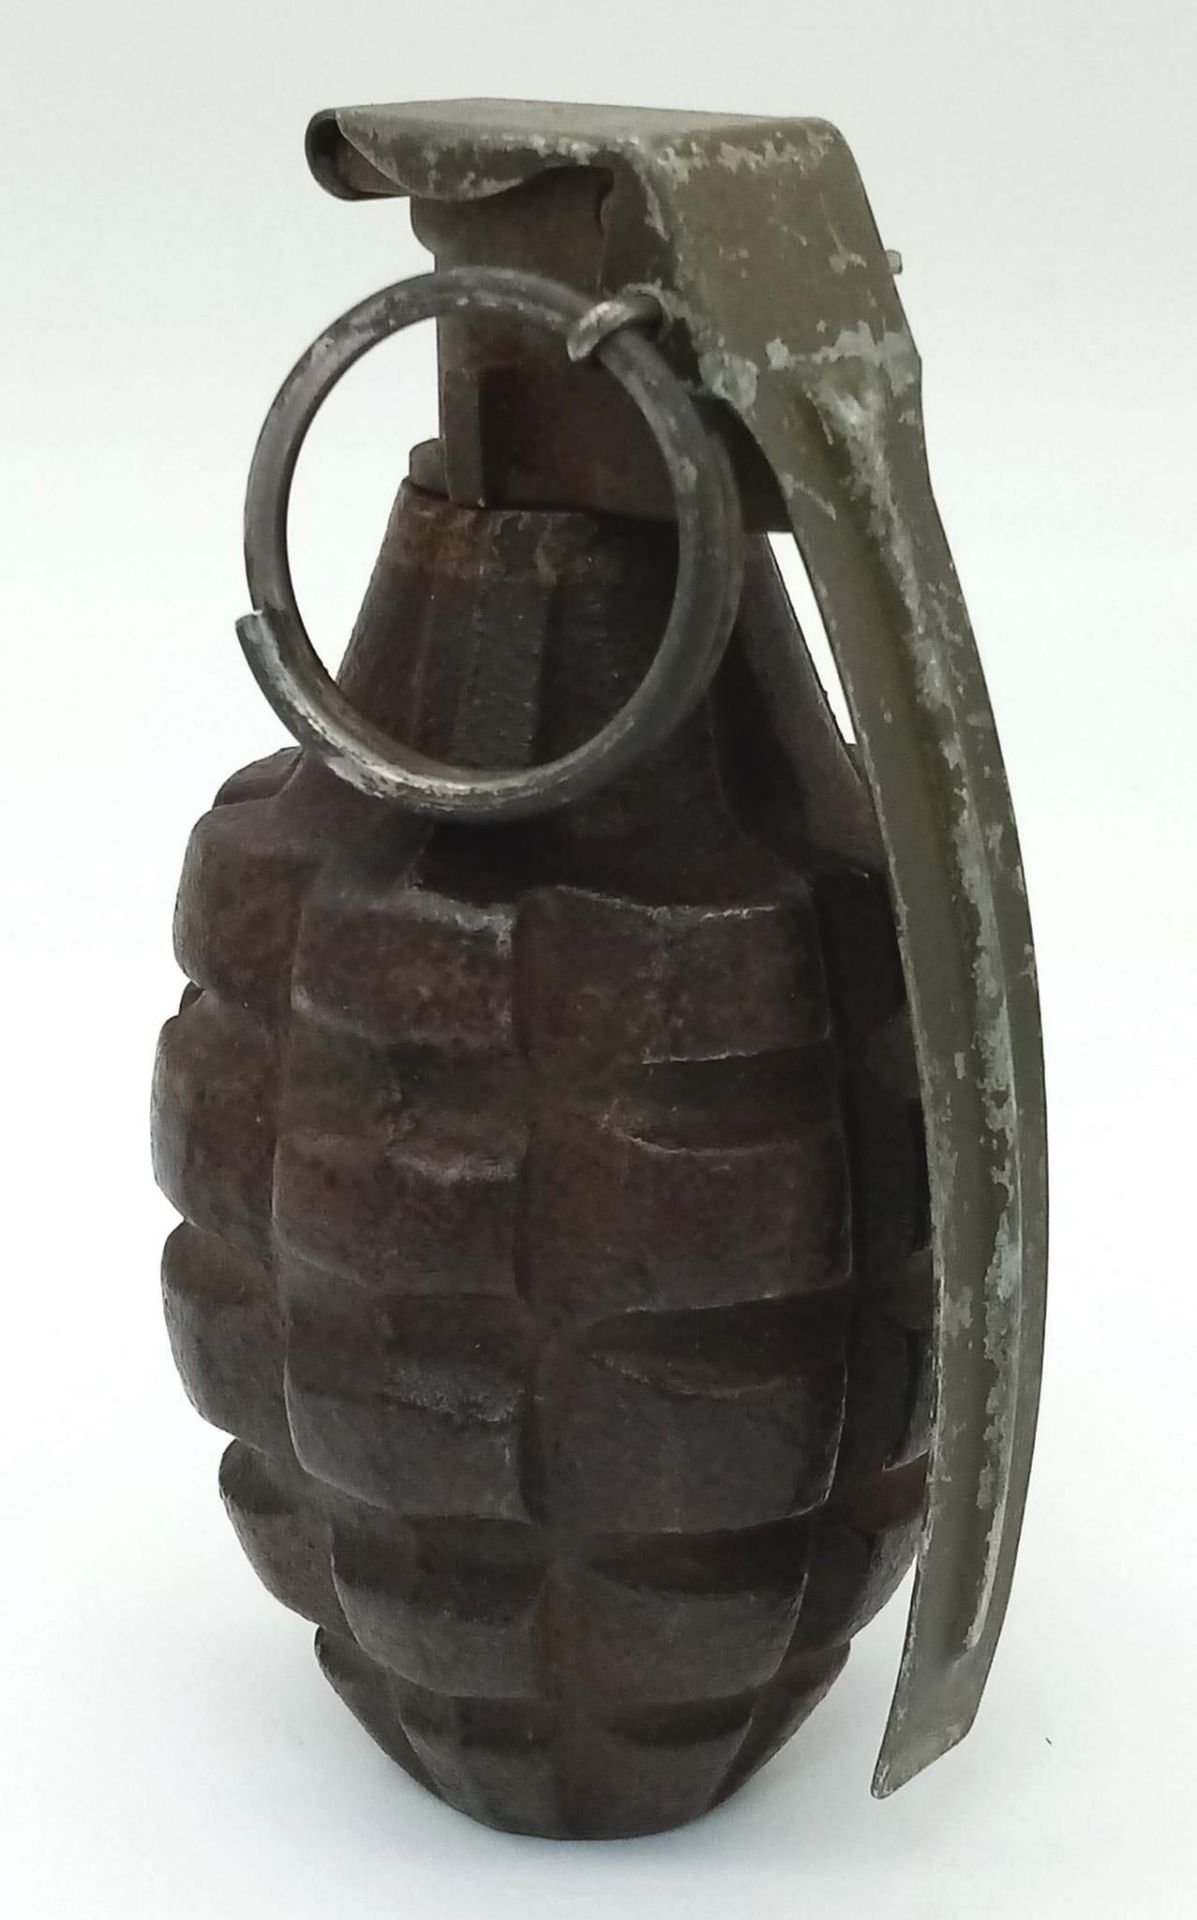 INERT WW2 US Mk II “Pineapple” Grenade. Super example of this WW2 Iconic hand grenade. 100% original